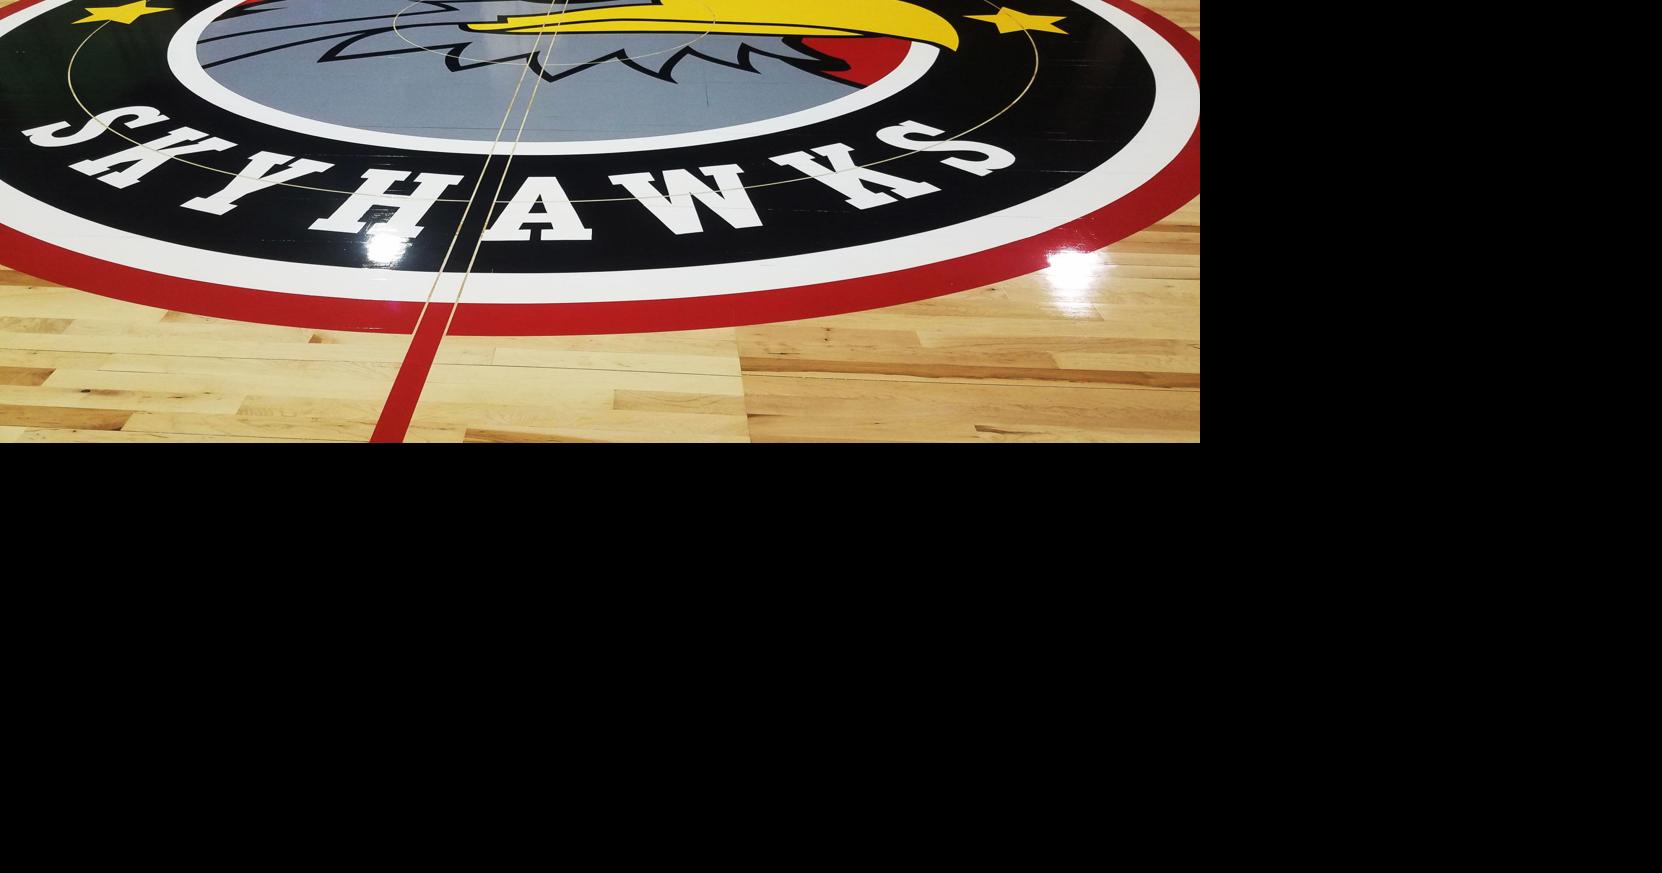 College Park Skyhawks (@cpskyhawks) • Instagram photos and videos